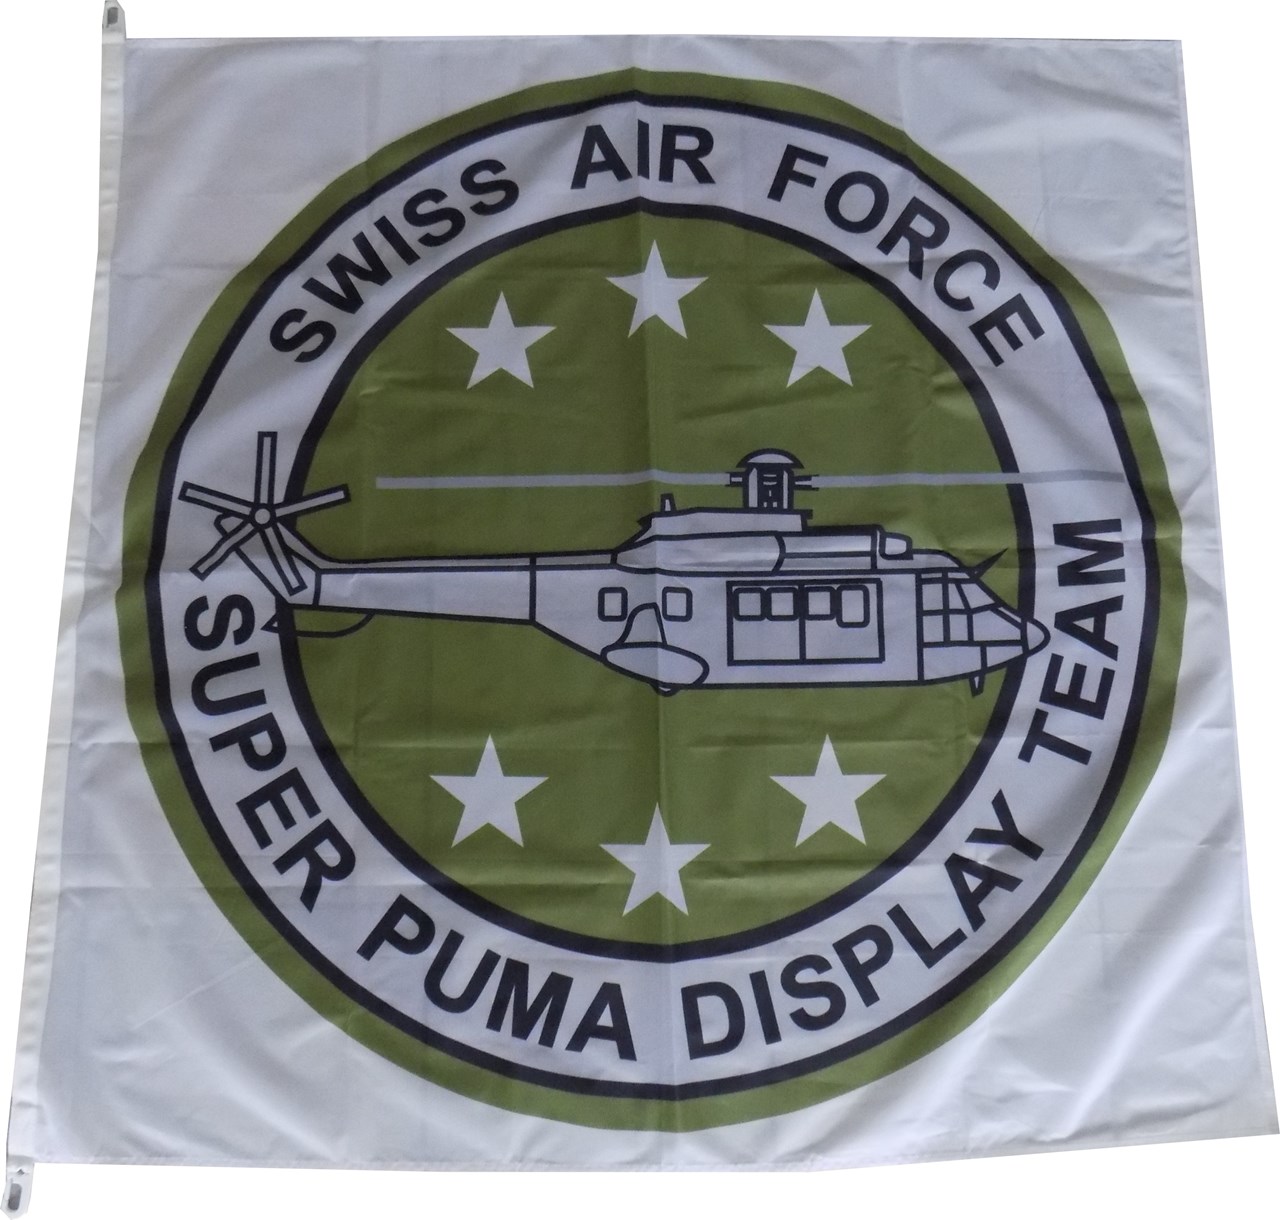 Bild von Super Puma Display Team Flagge, Fahne, Hissfahne